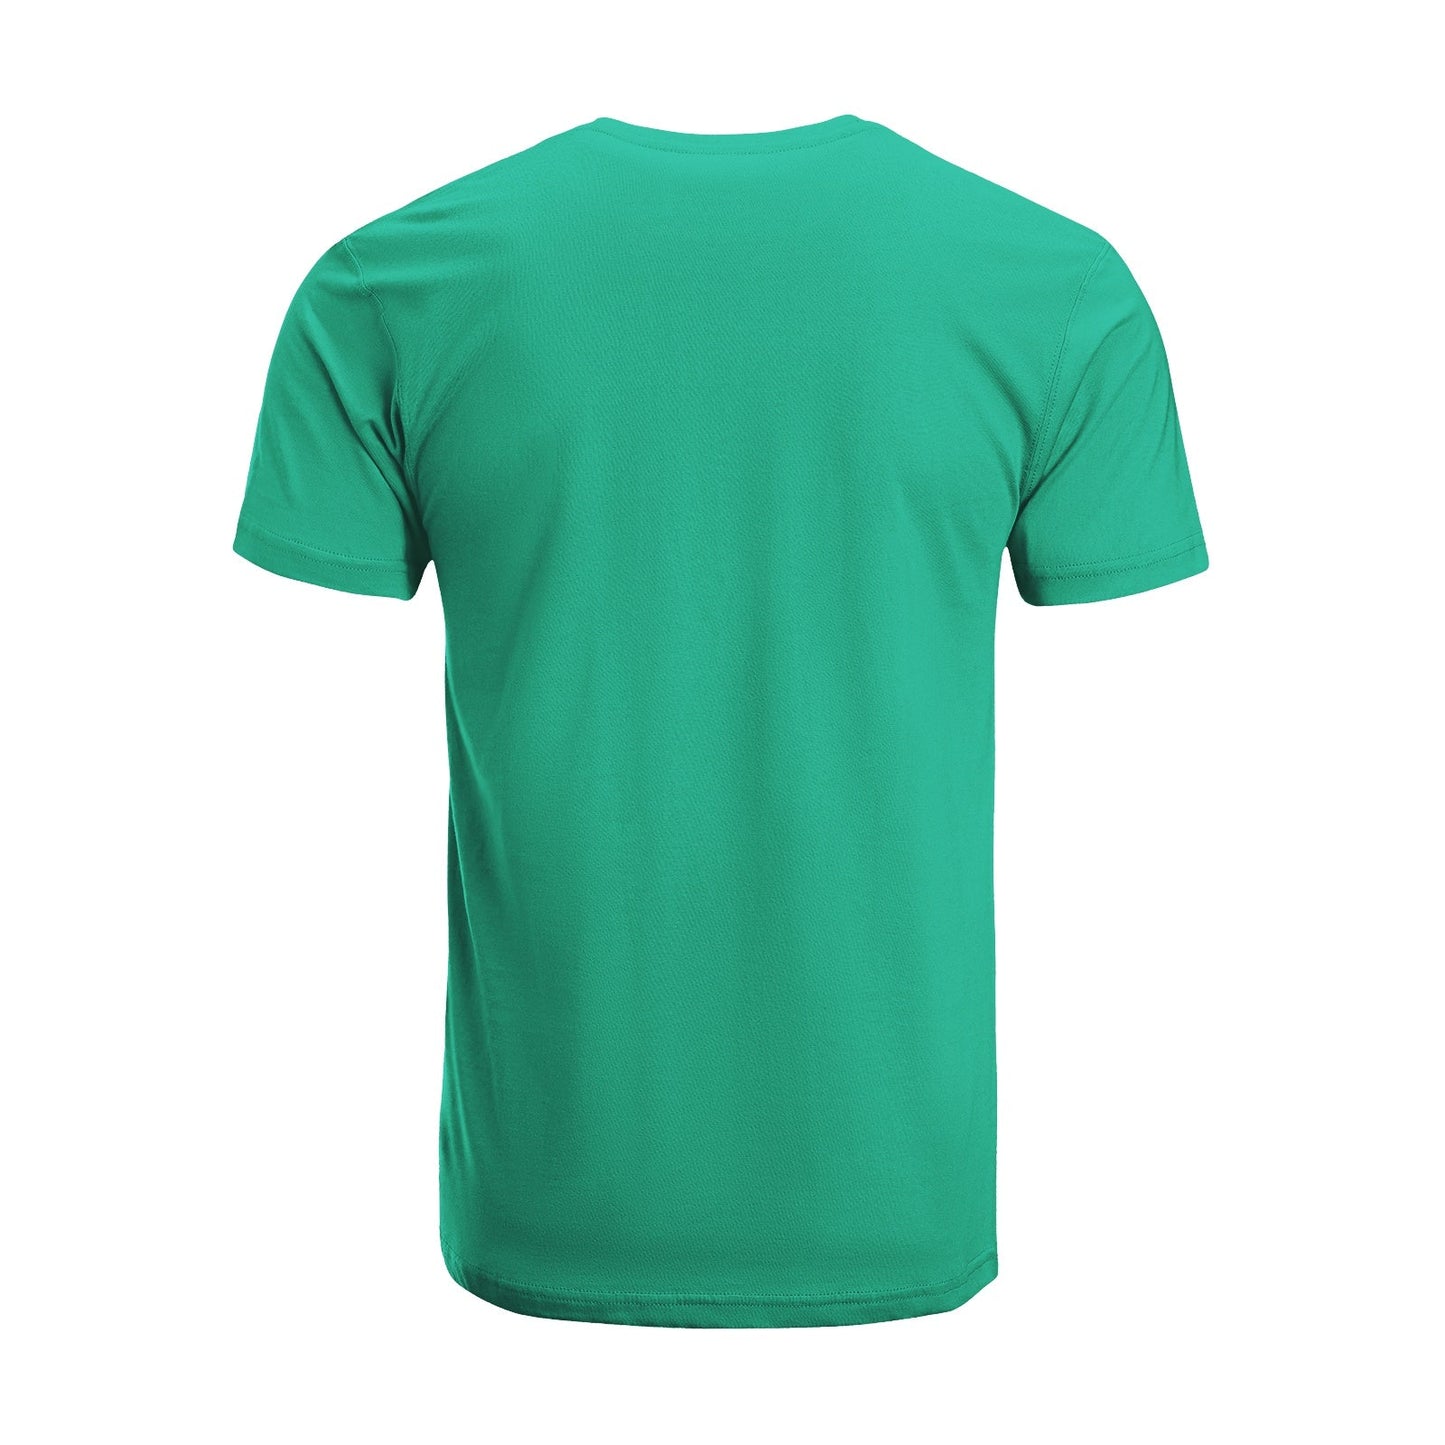 Unisex Short Sleeve Crew Neck Cotton Jersey T-Shirt CAT 31 - Tara-Outfits.com